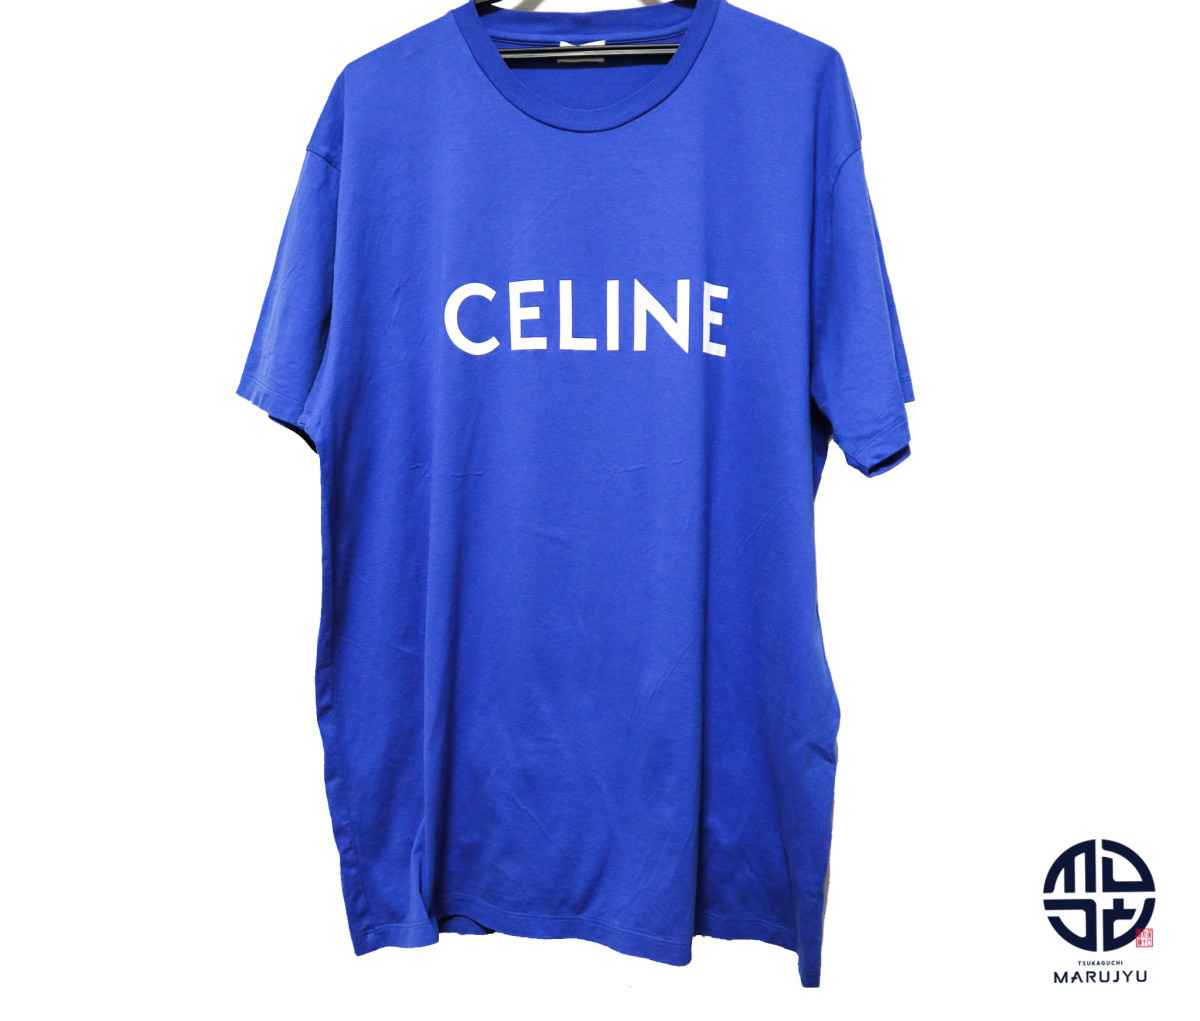 CELINE セリーヌ ロゴ ブルー 青 Tシャツ 2X681501F メンズ 半袖 服 アパレル サイズXXL_画像1